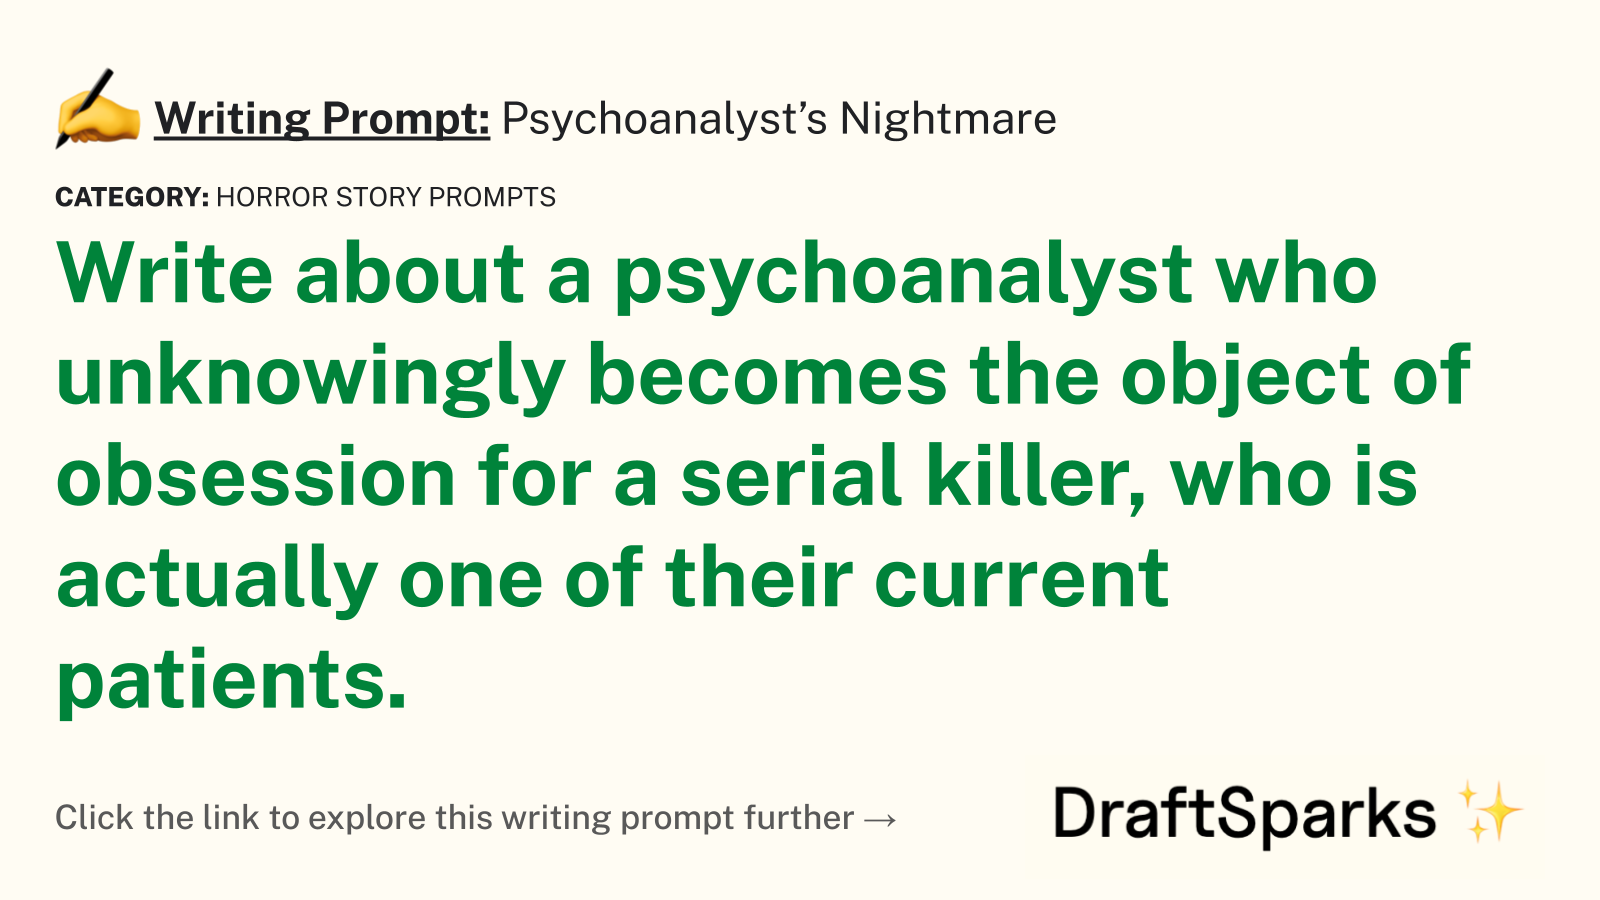 Psychoanalyst’s Nightmare